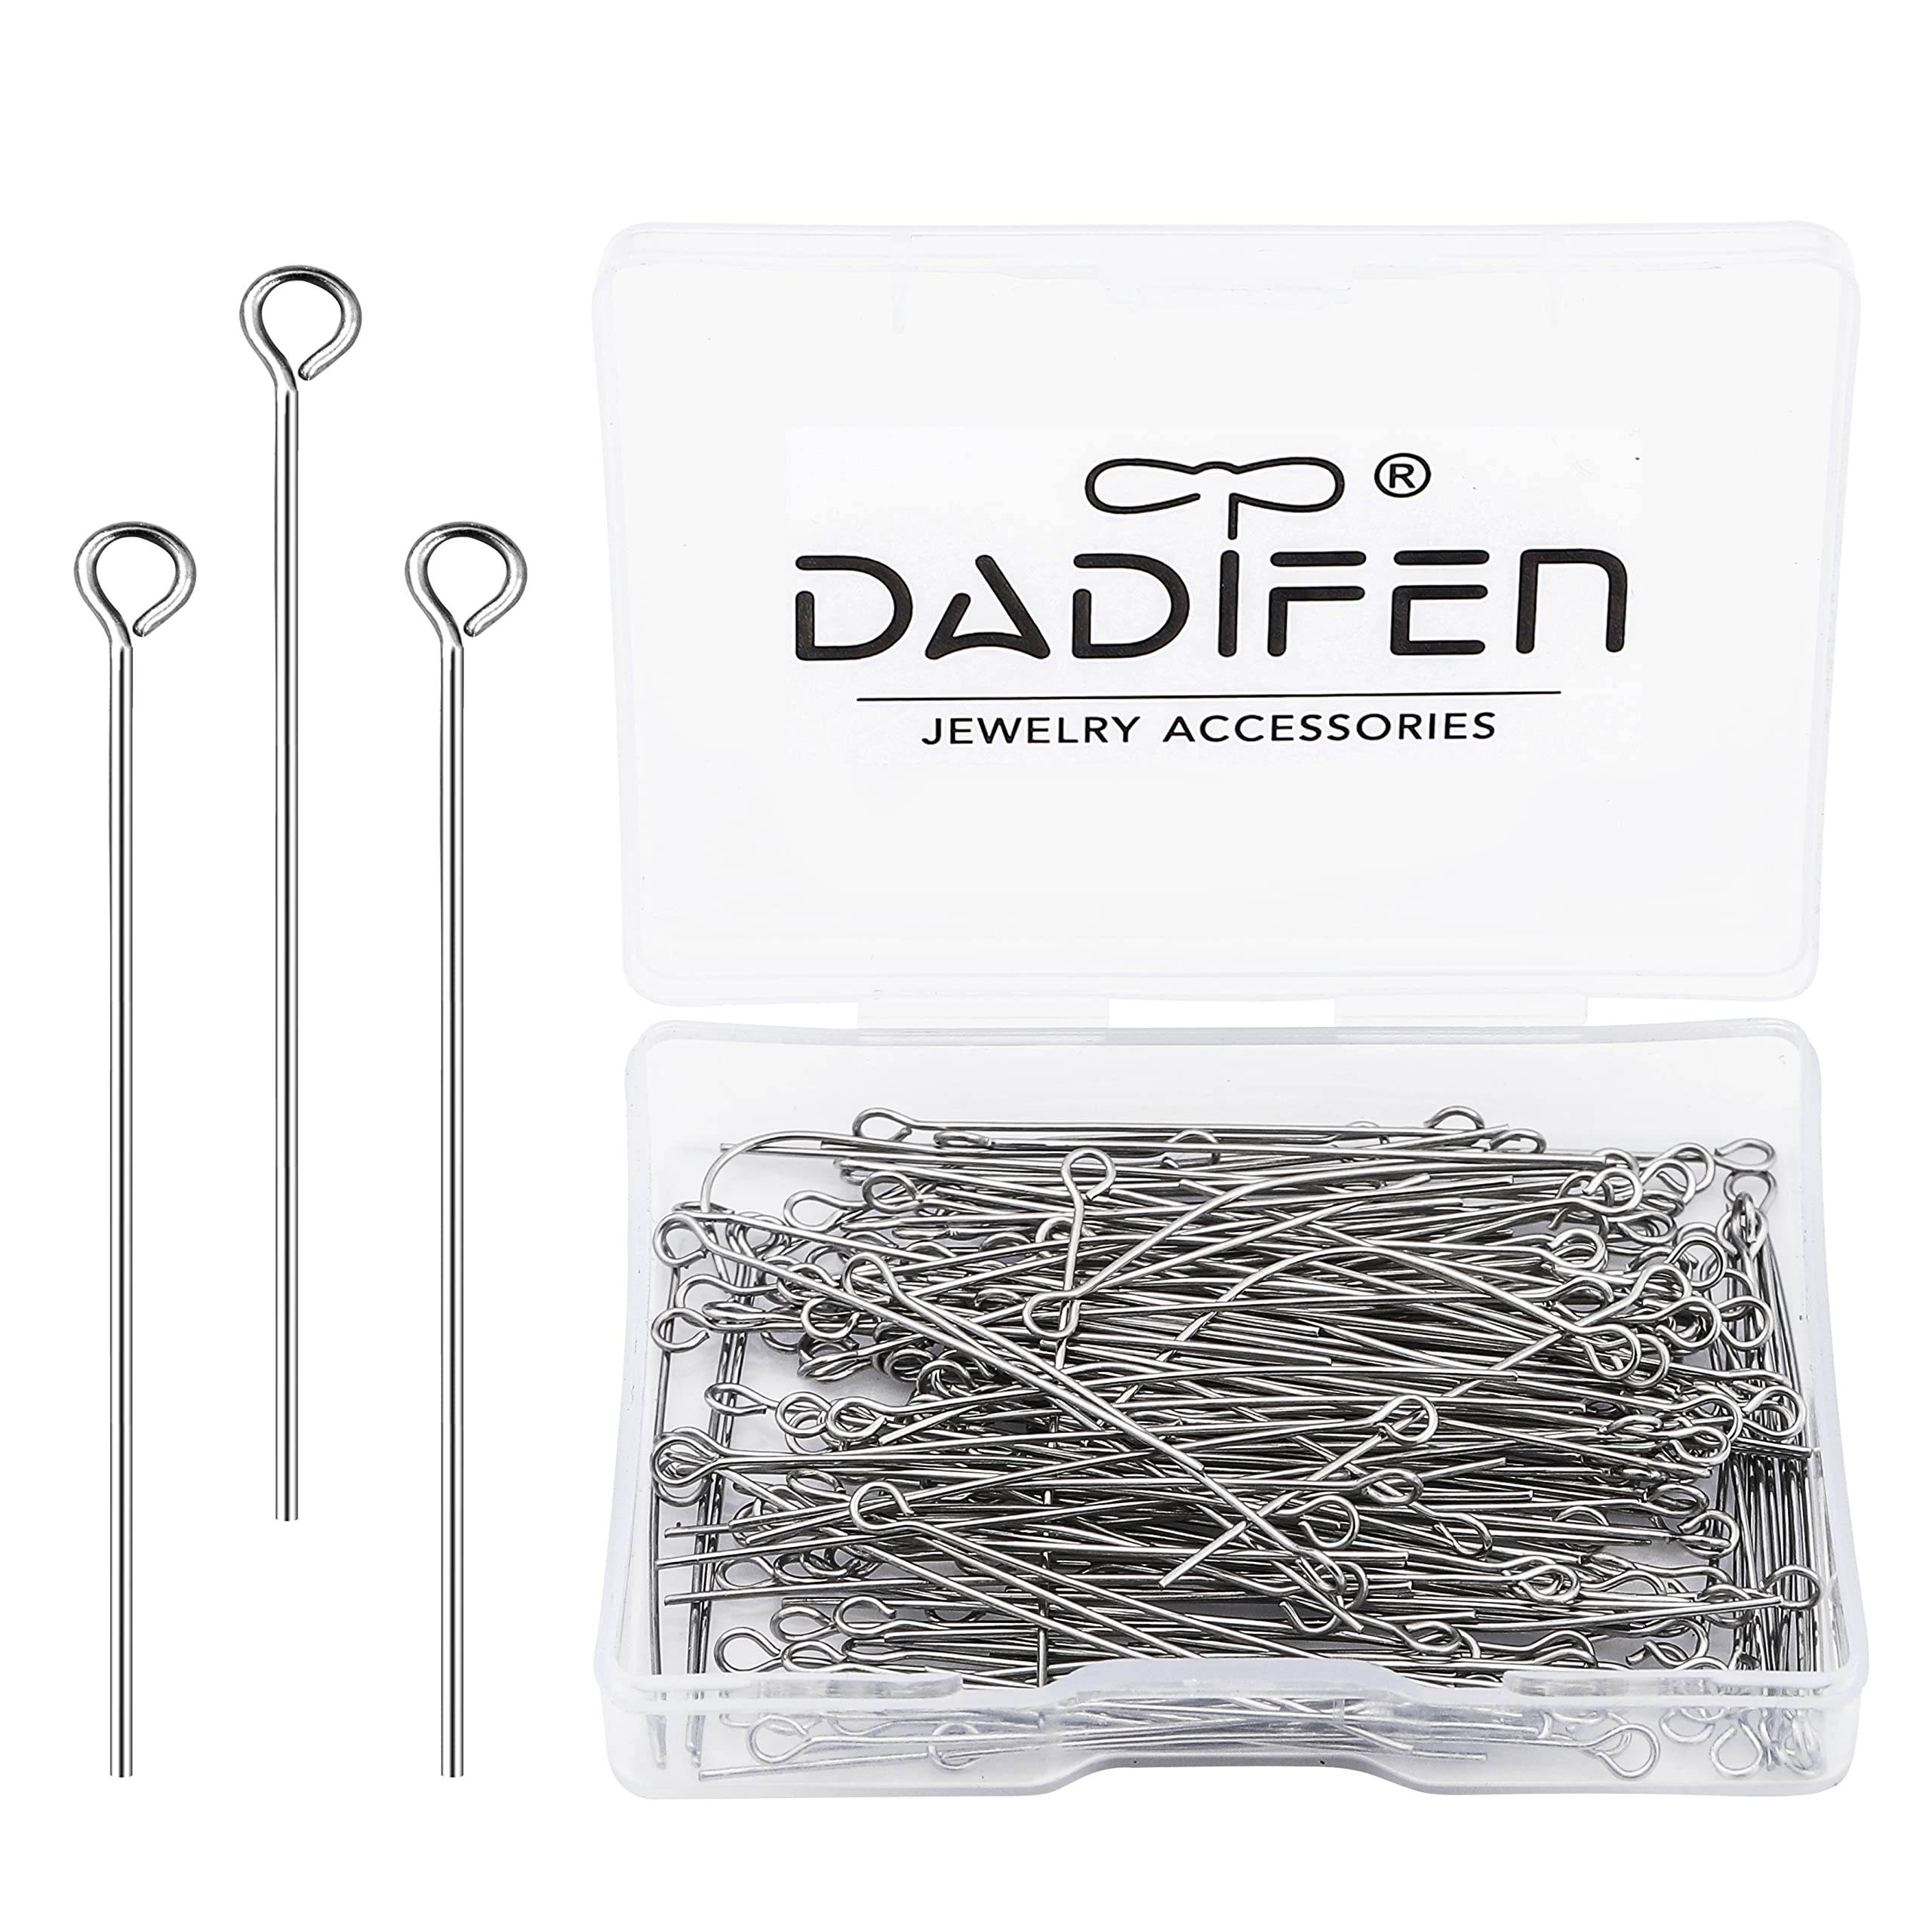 DADIFEN 304 Stainless-Steel Eye Pins for Jewelry Making 24 Gauge